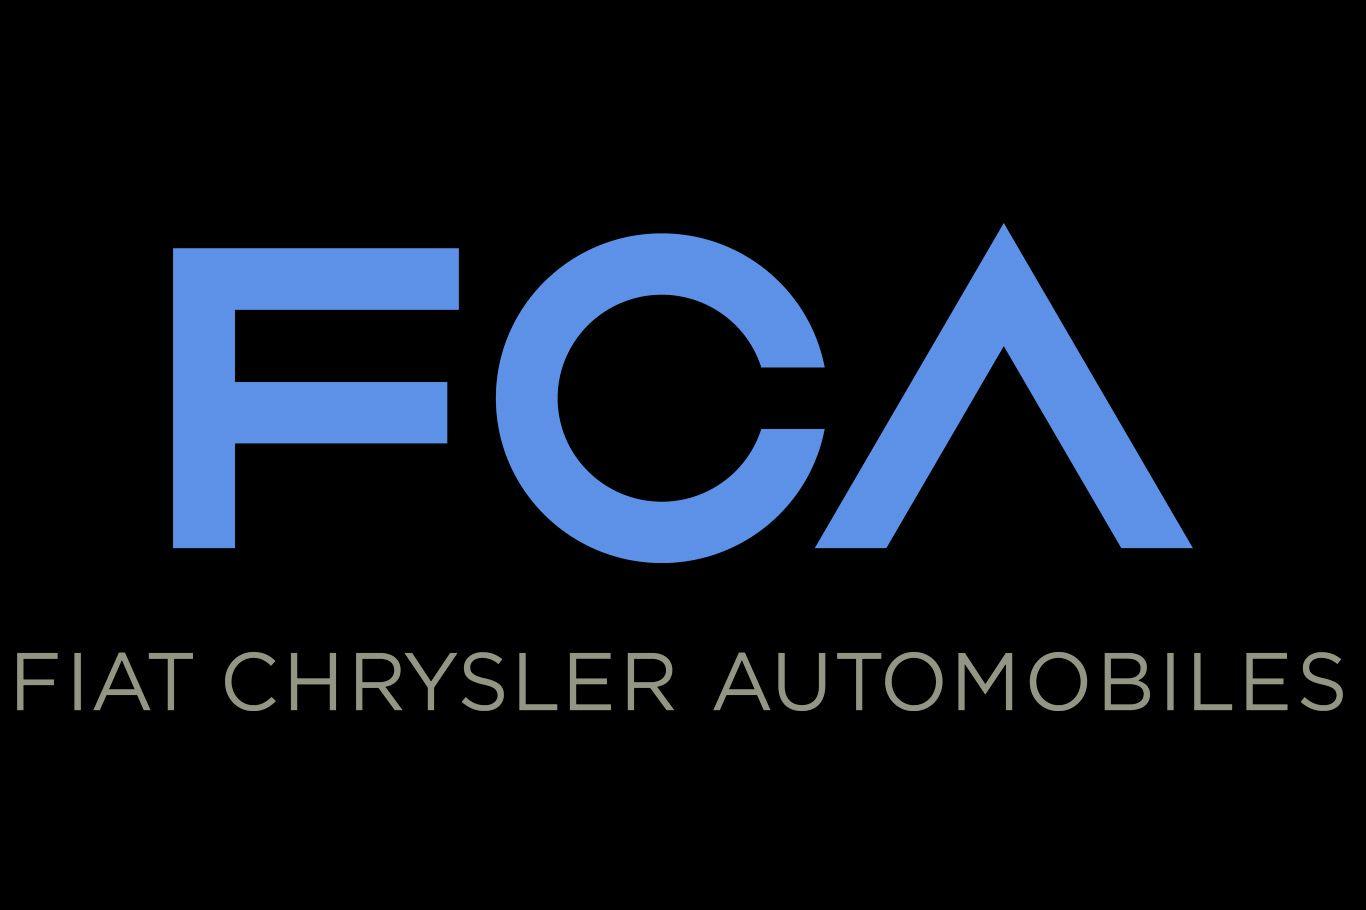 Chrysler FCA Logo - Fca chrysler Logos